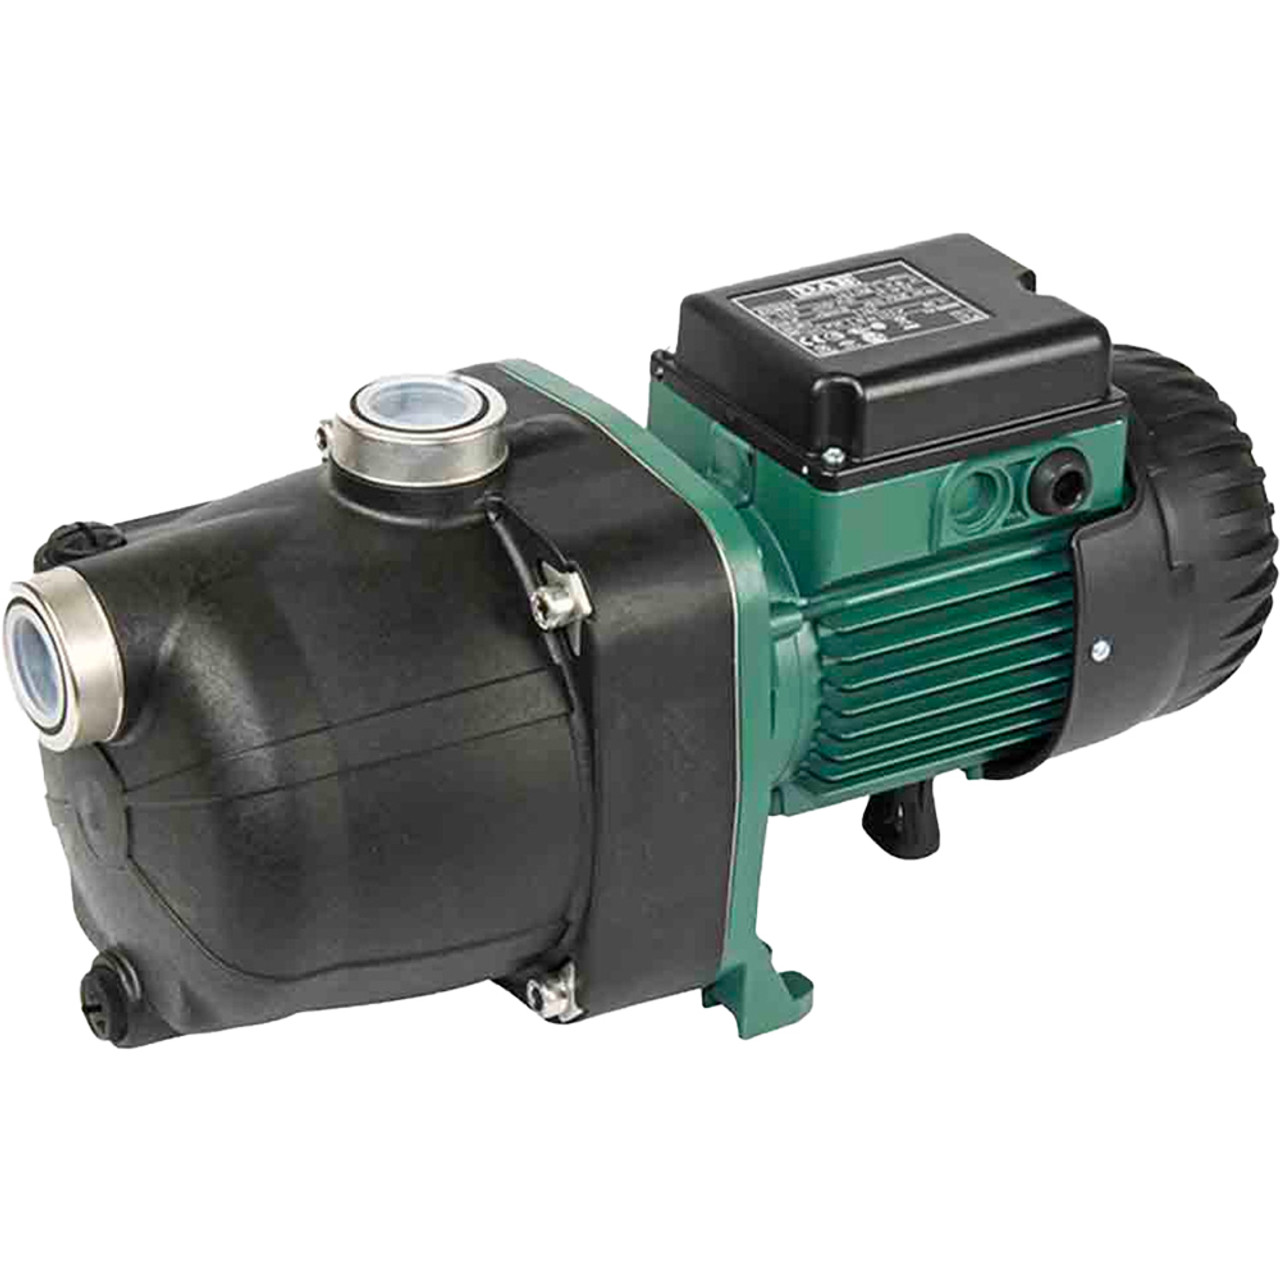 Domestic Pressure Water Pump by DAB Pumps 132M JETCOM Manual